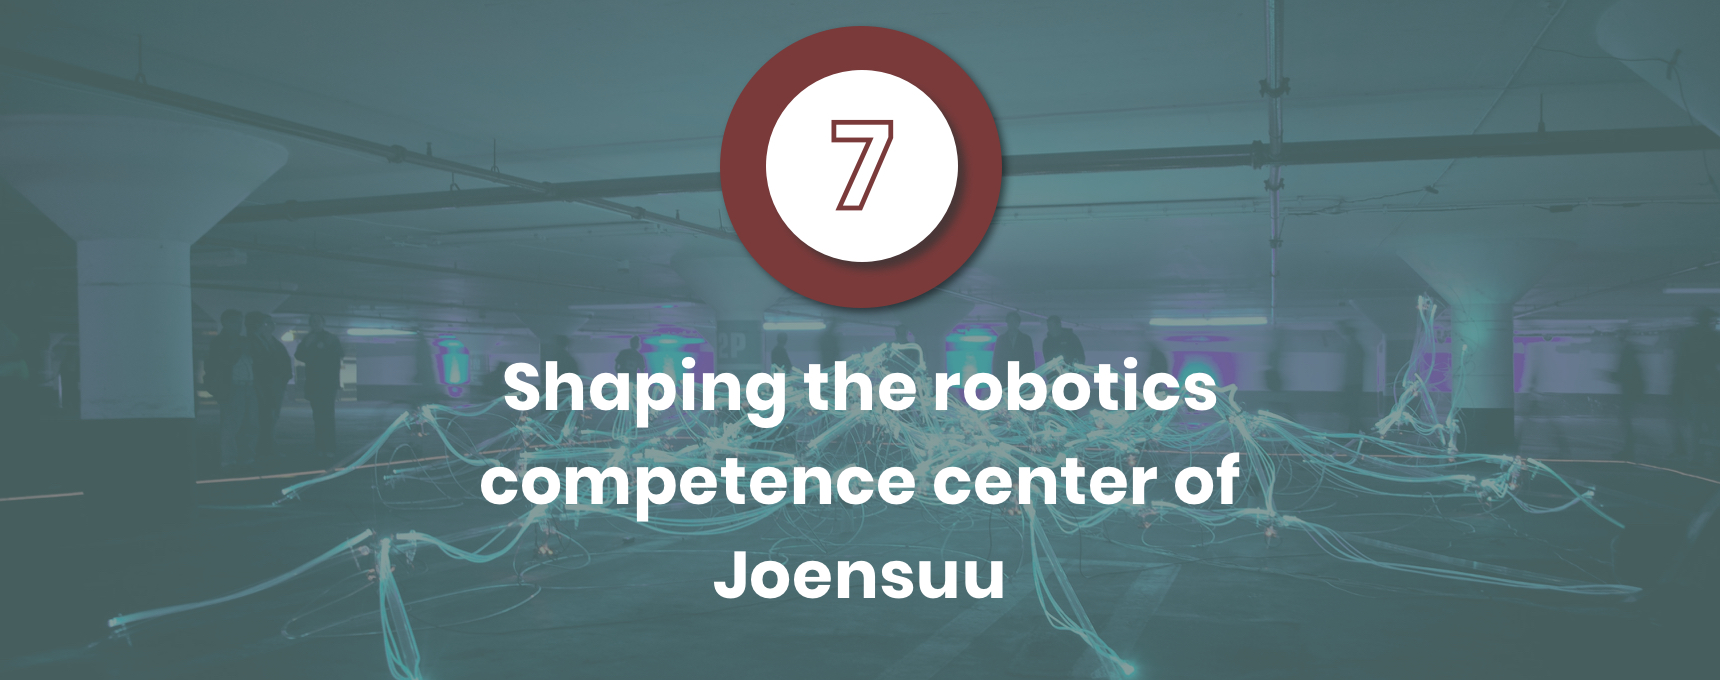 Shaping the robotics competence center of Joensuu